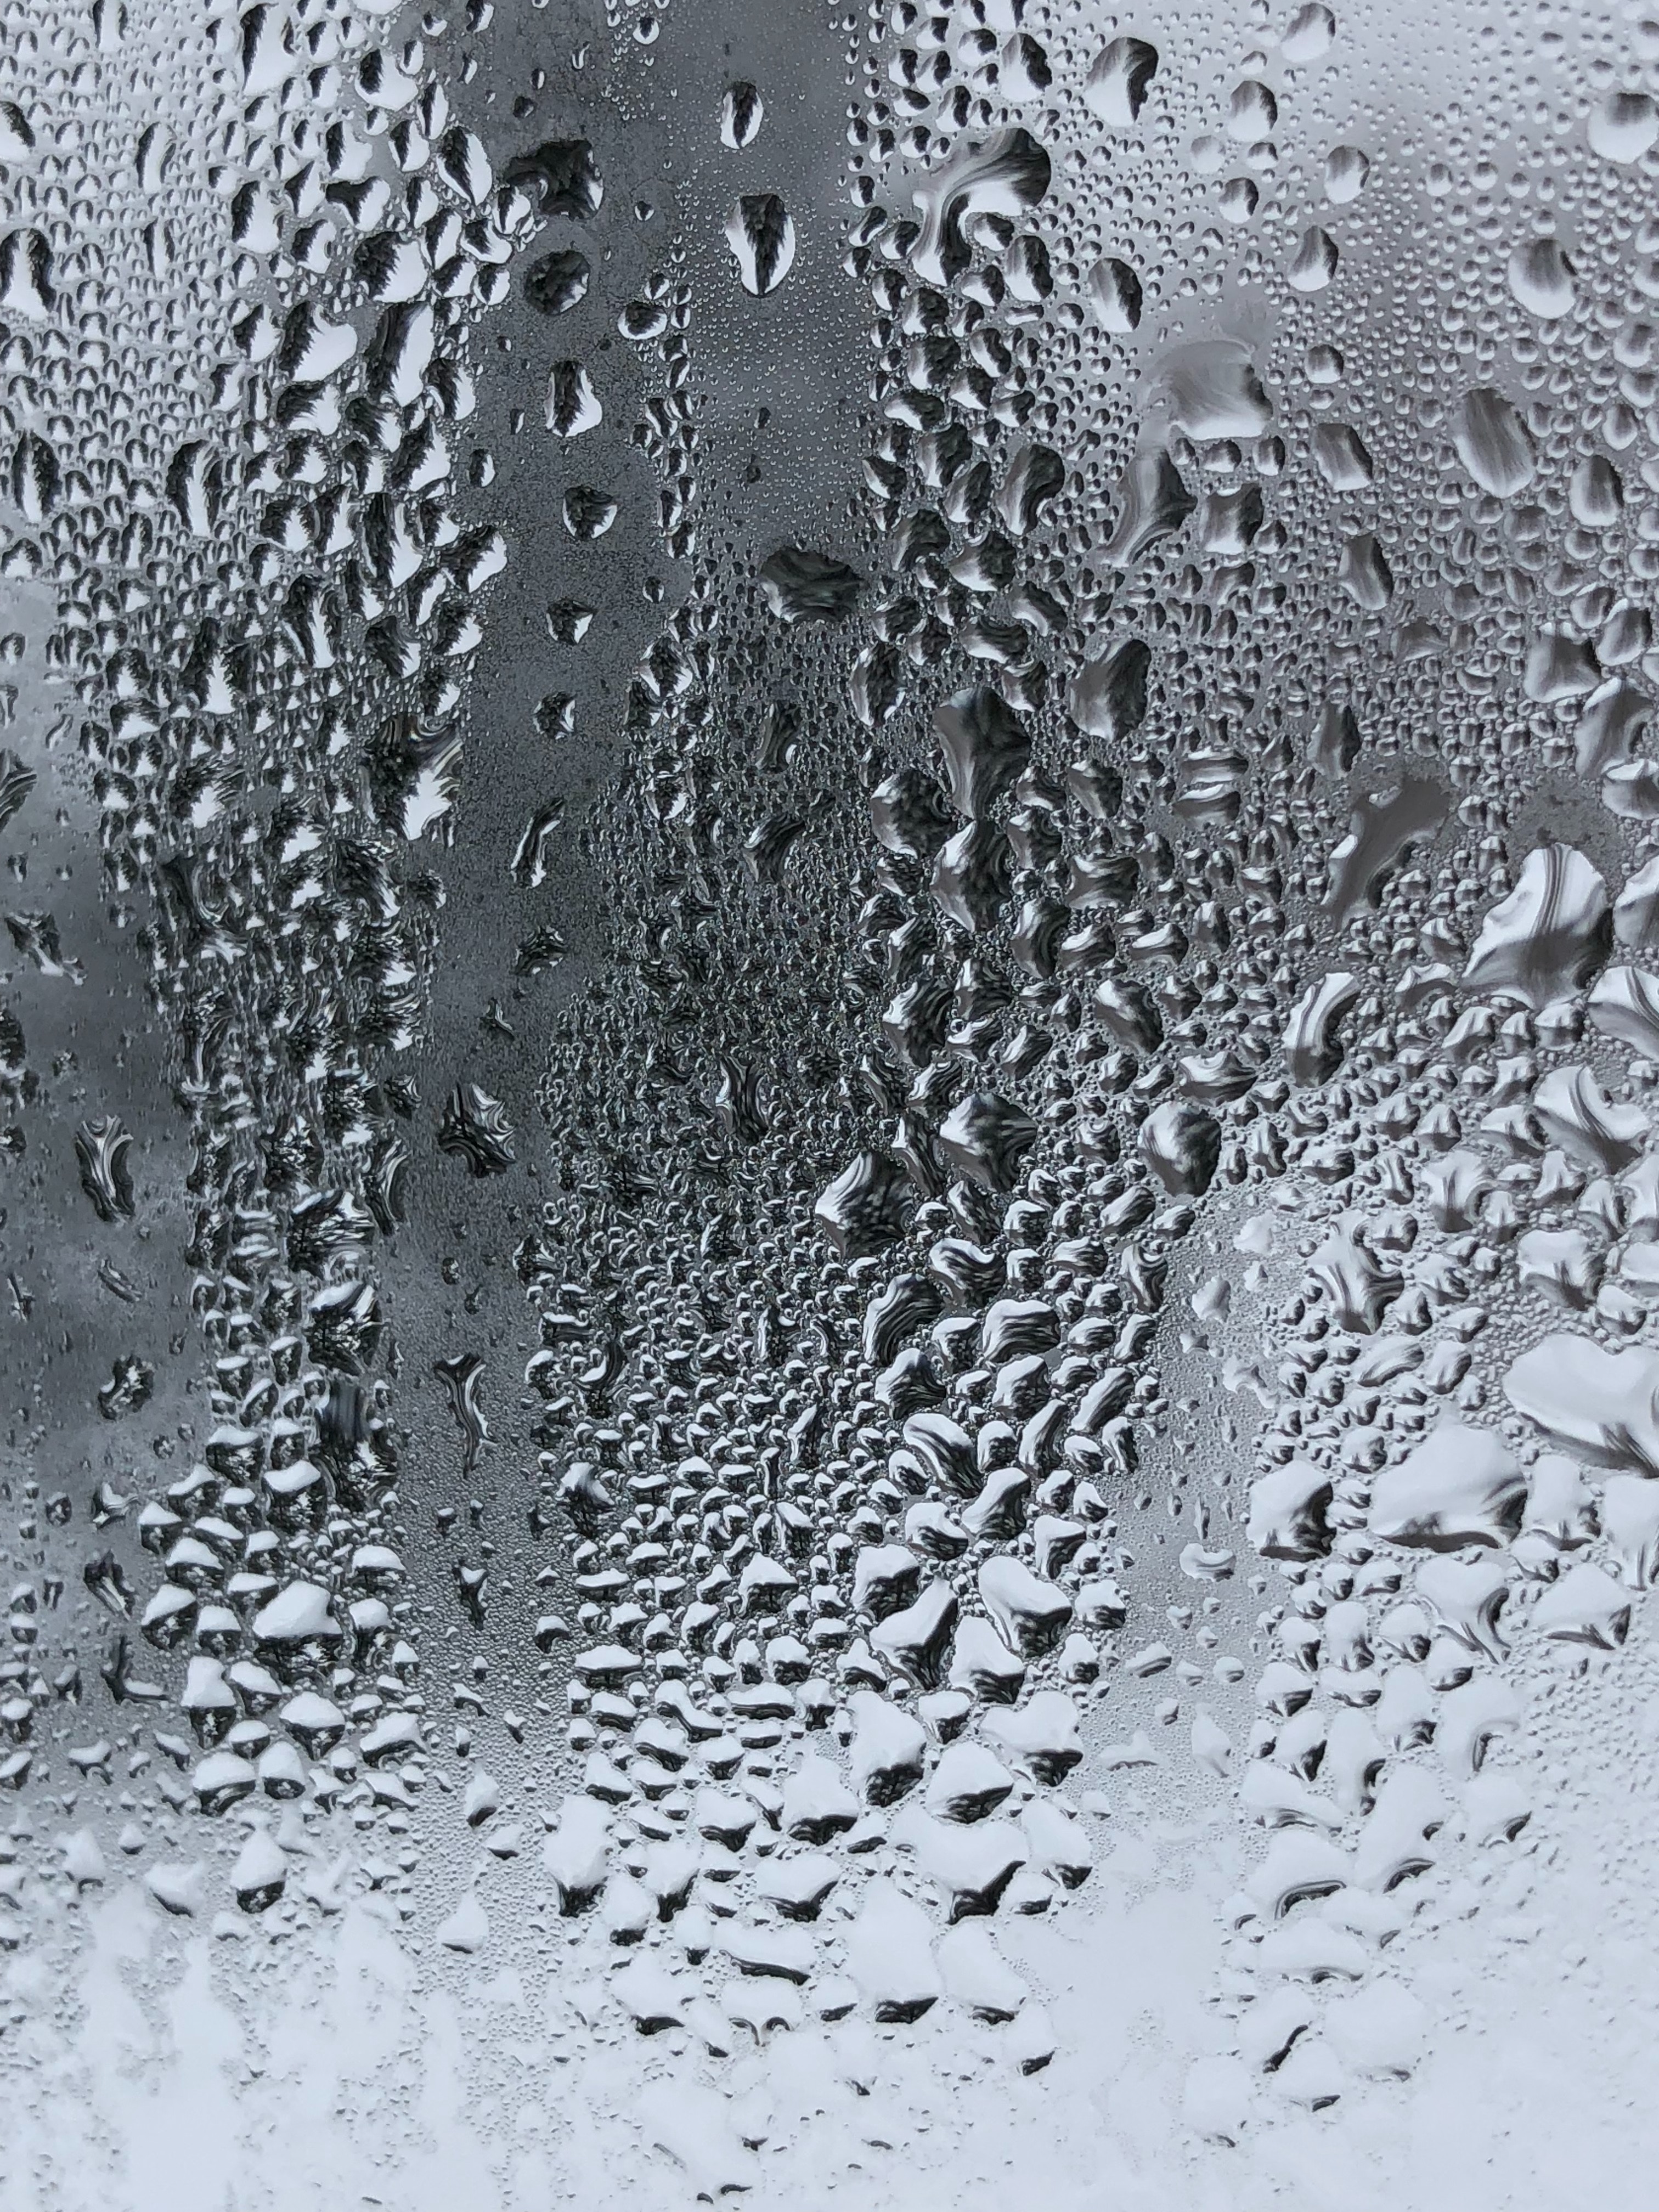 Капли дождя на стекле